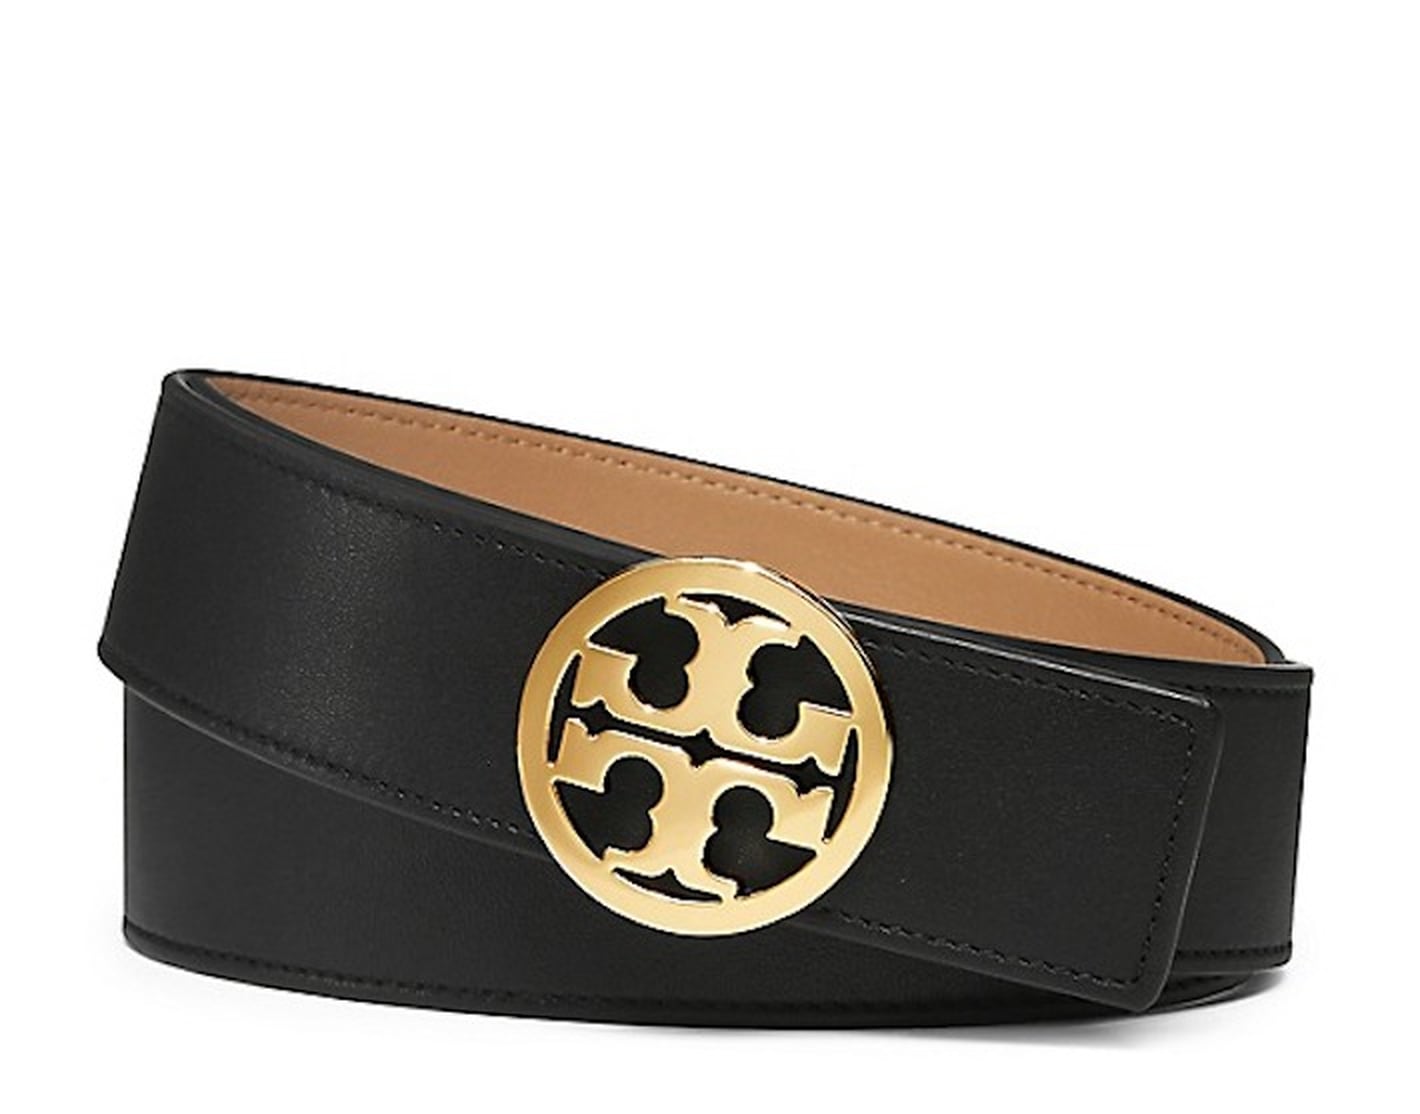 Affordable Belts Like the Gucci Double G Belt | POPSUGAR Fashion